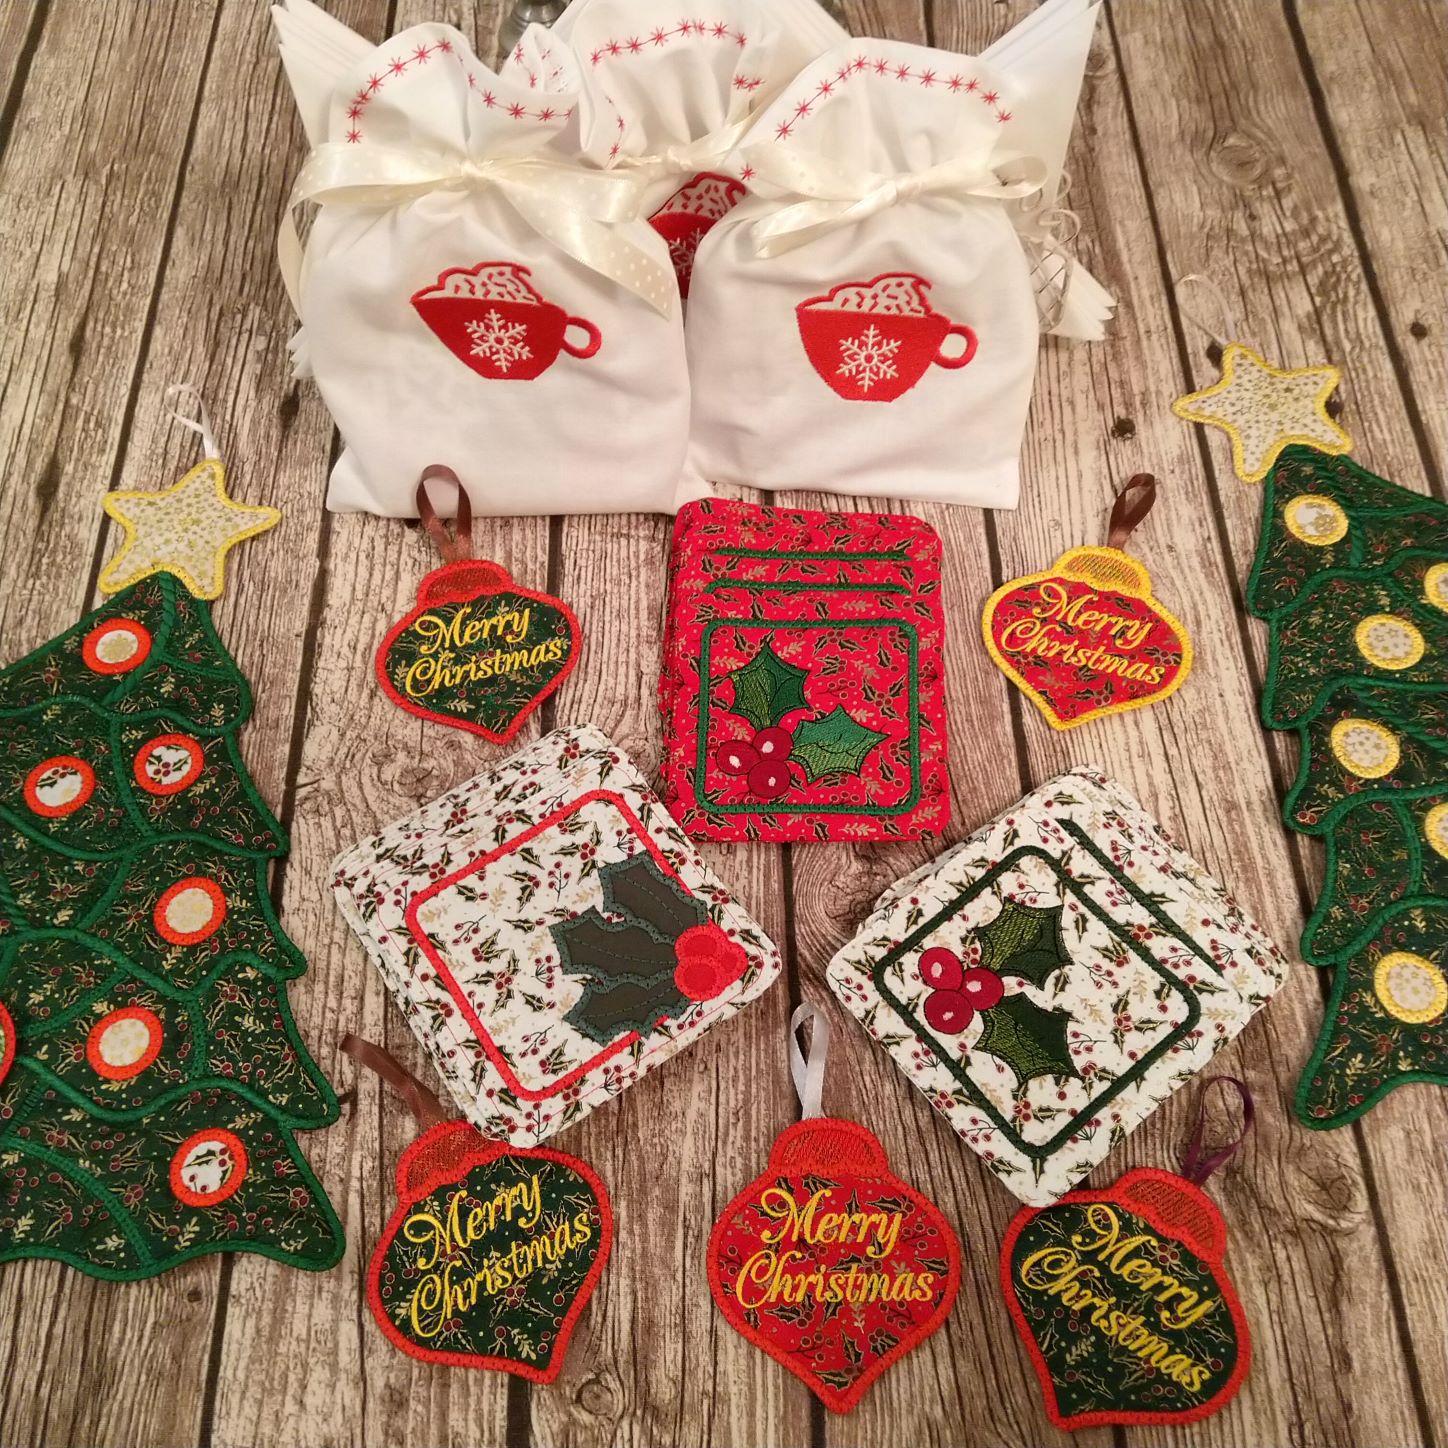 Adorable embroidered Christmas gifts